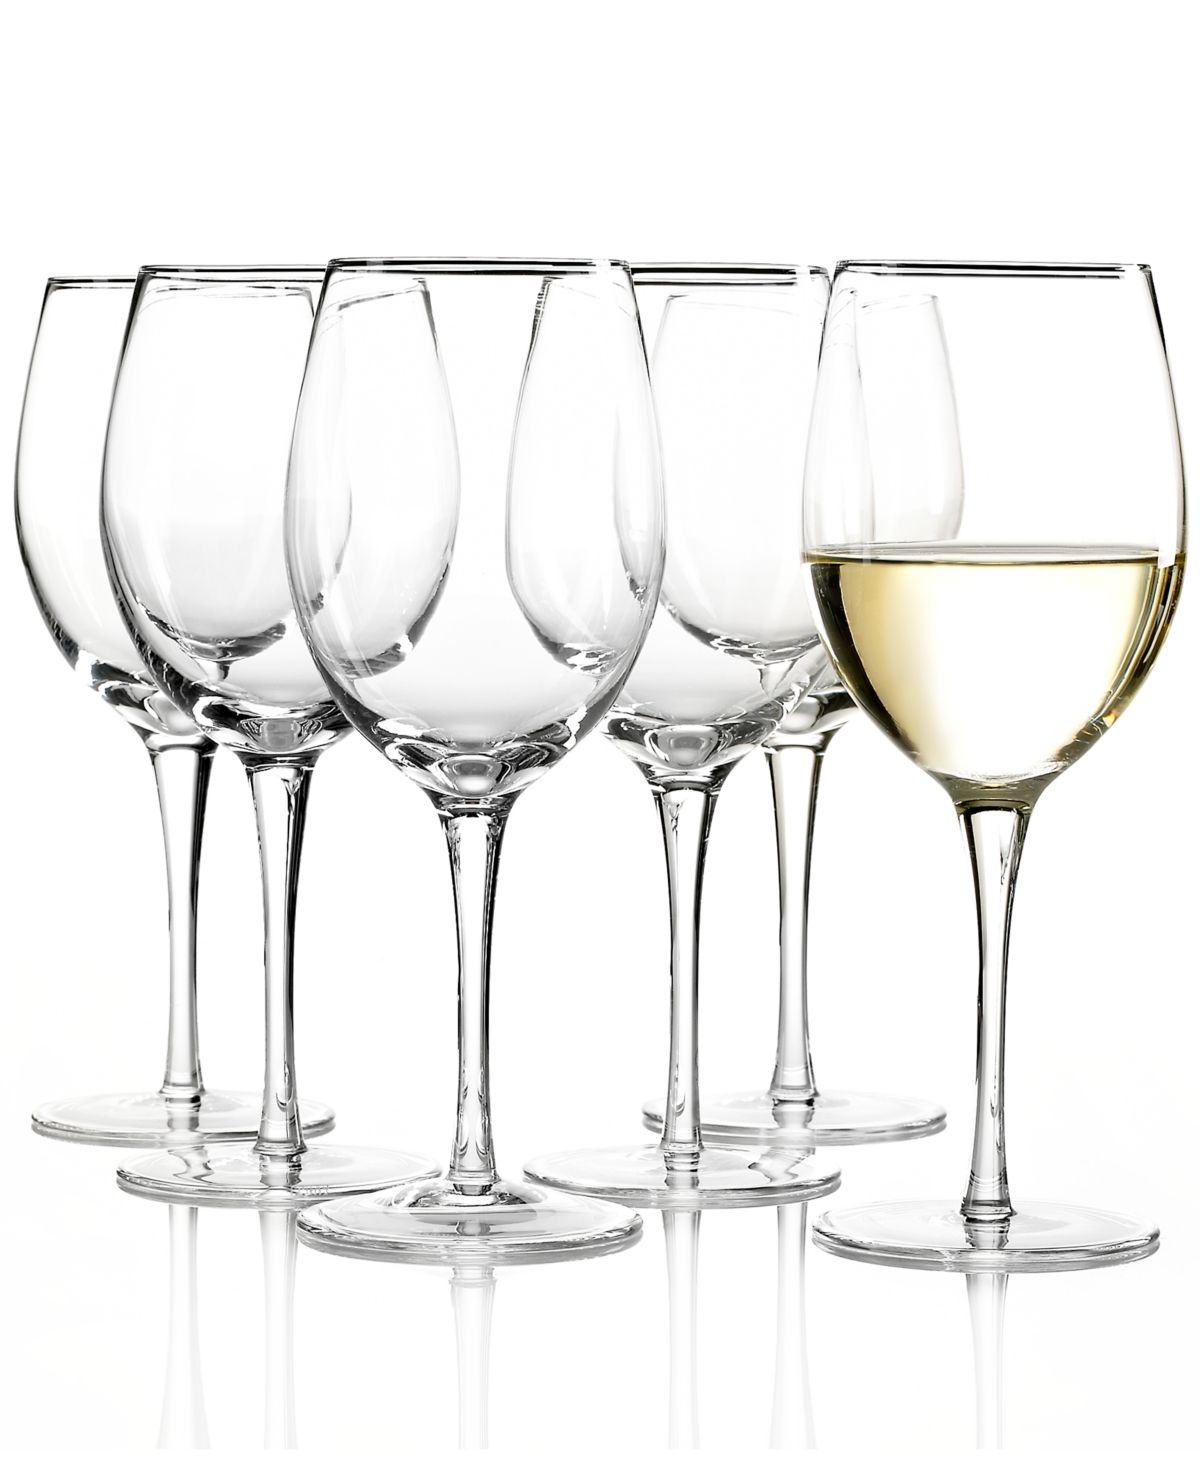 Lenox Tuscany White Wine Glasses 6 Piece Value Set | Macys (US)